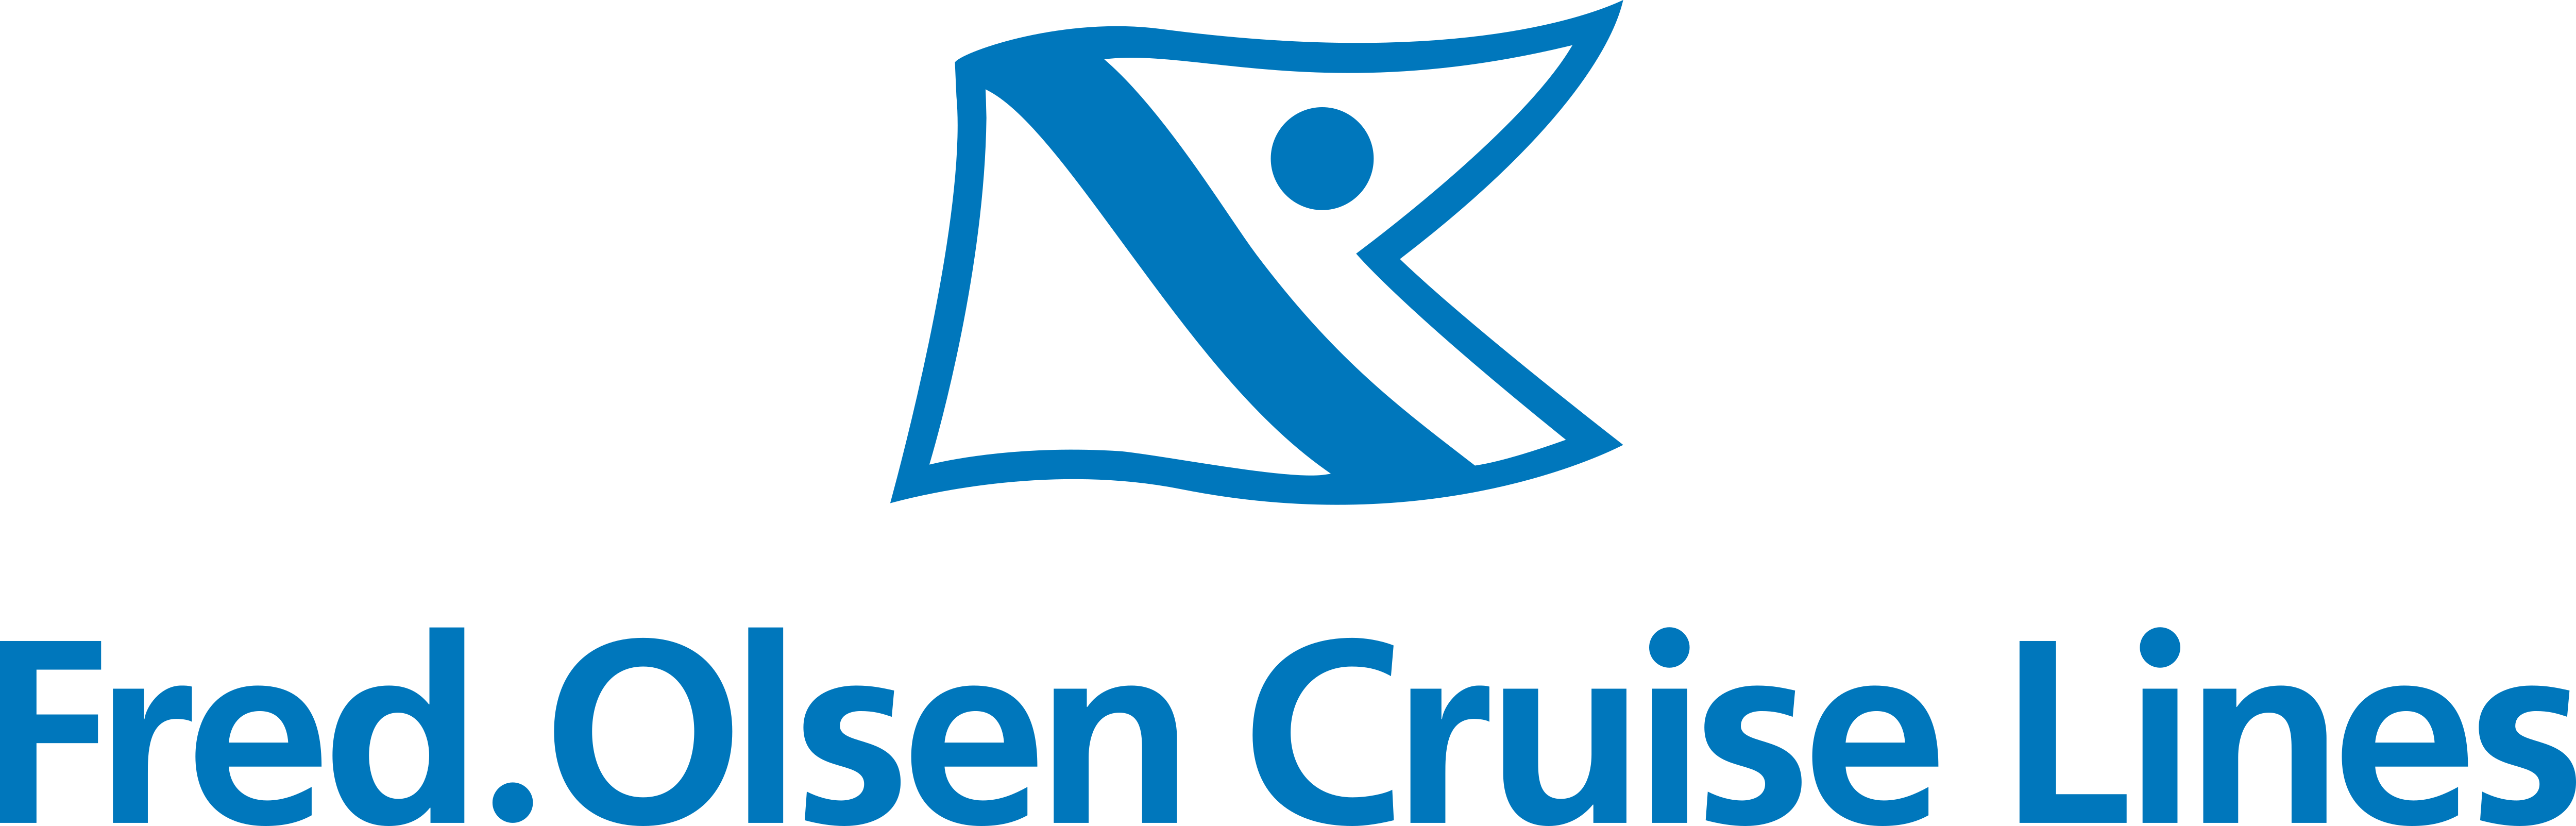 fred olsen cruise line latest news